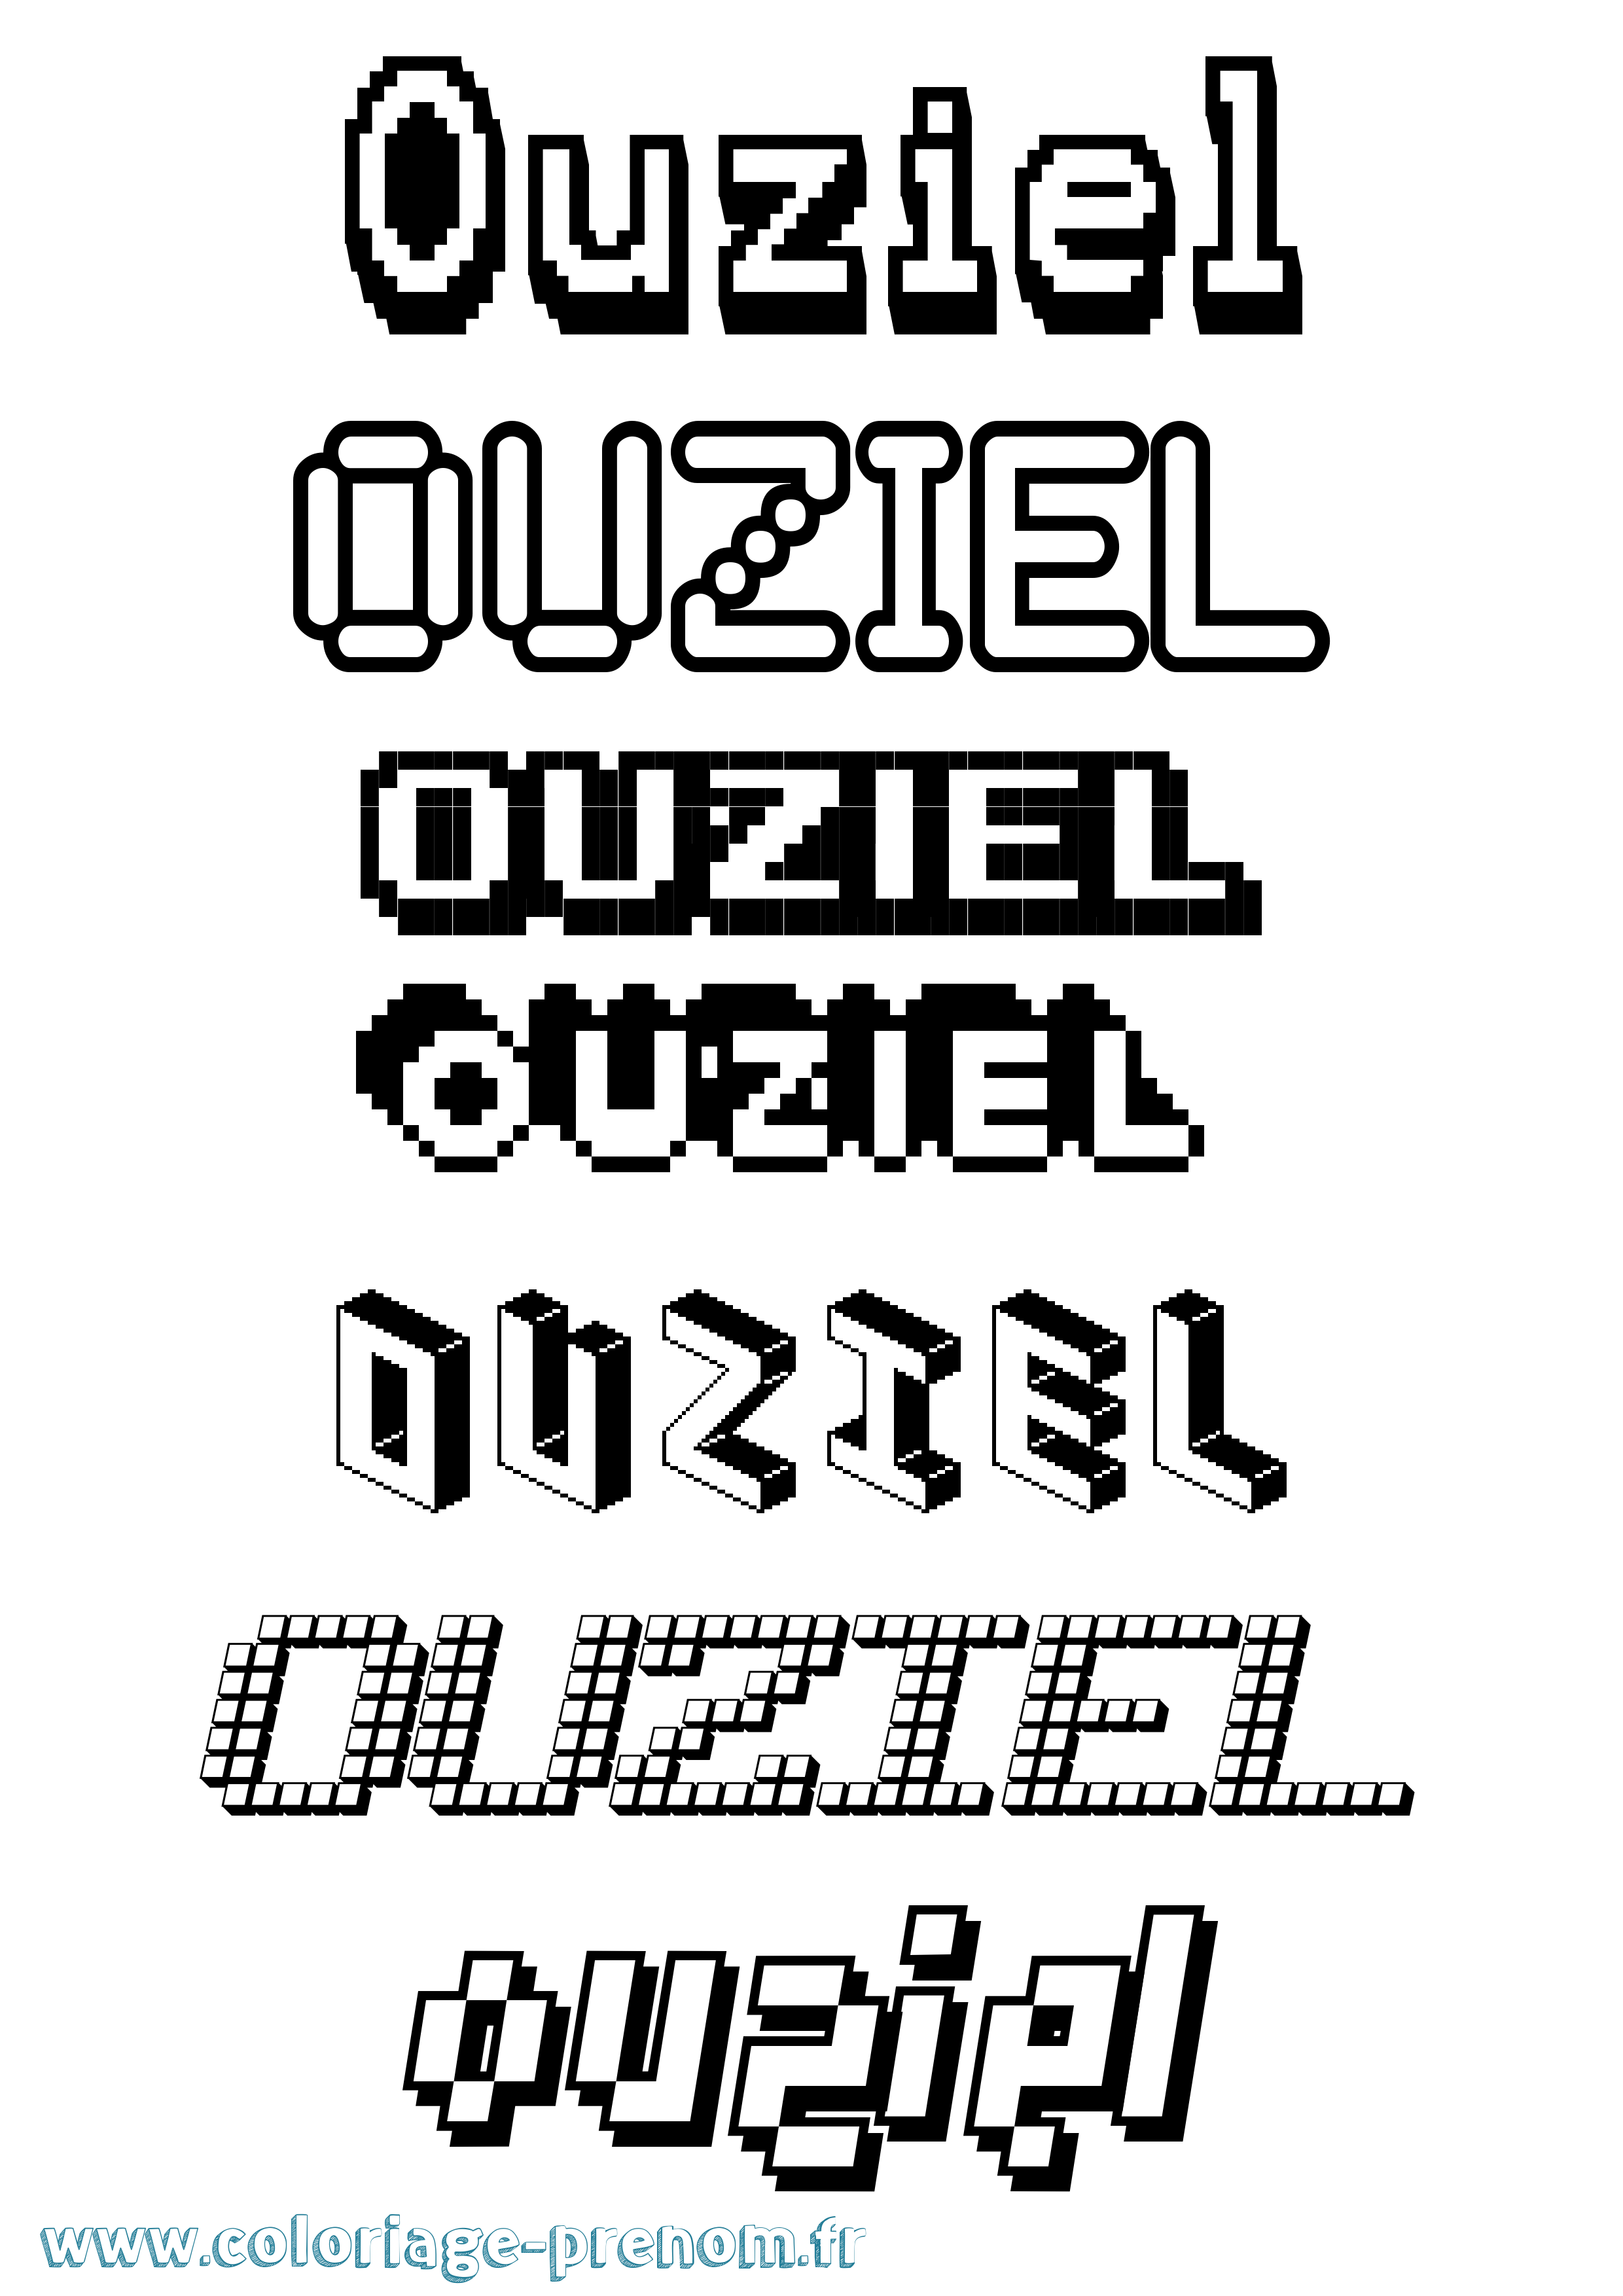 Coloriage prénom Ouziel Pixel